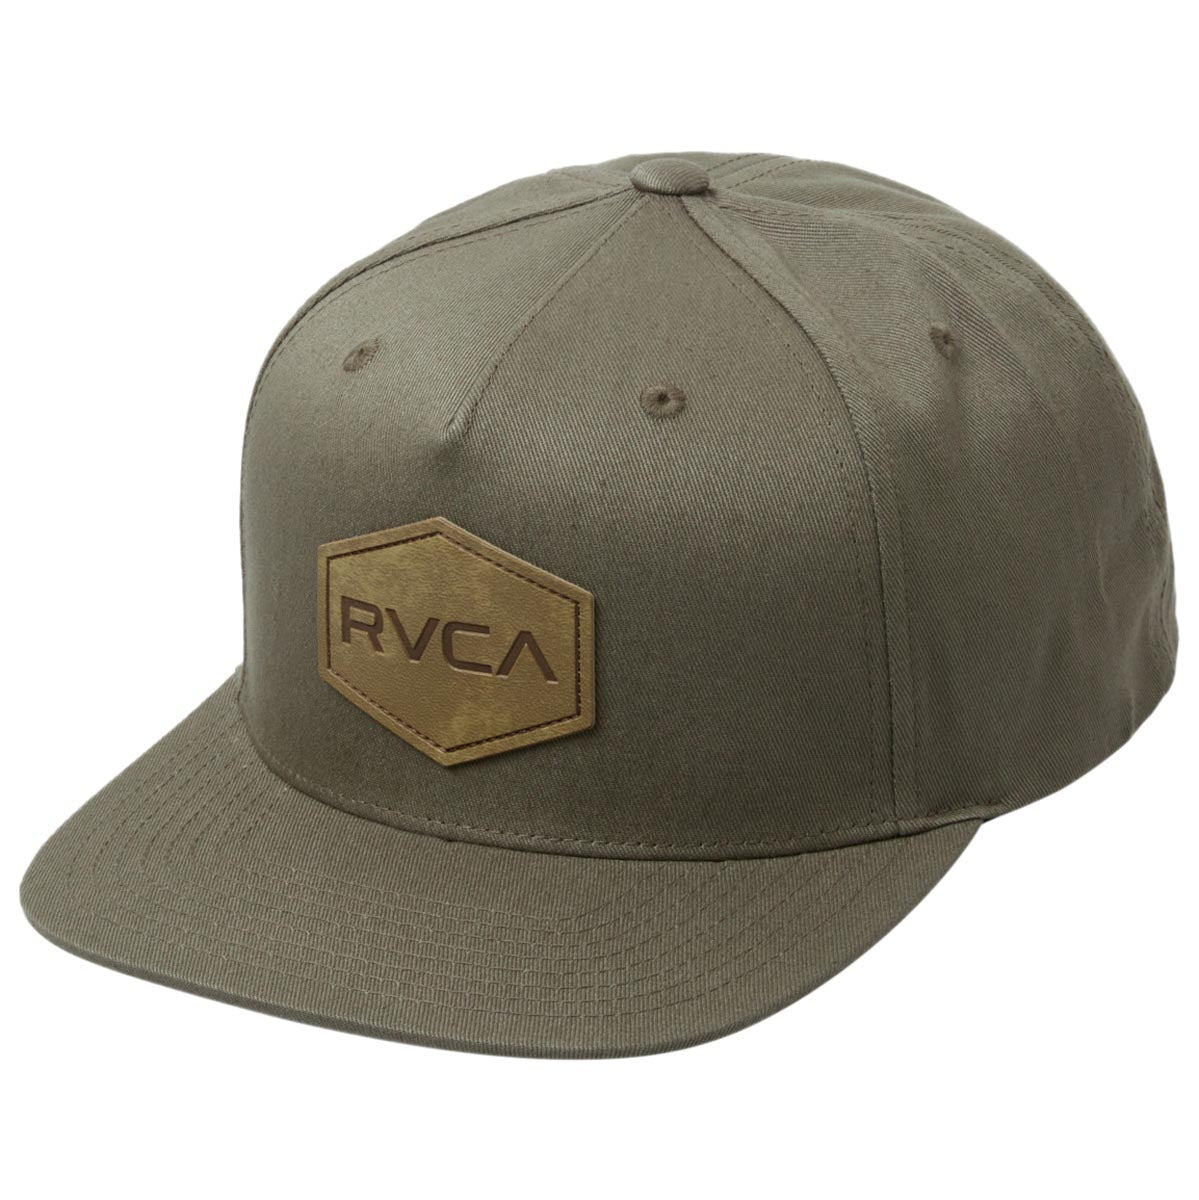 RVCA Commonwealth Dlx Snapback Hat - Khaki image 1